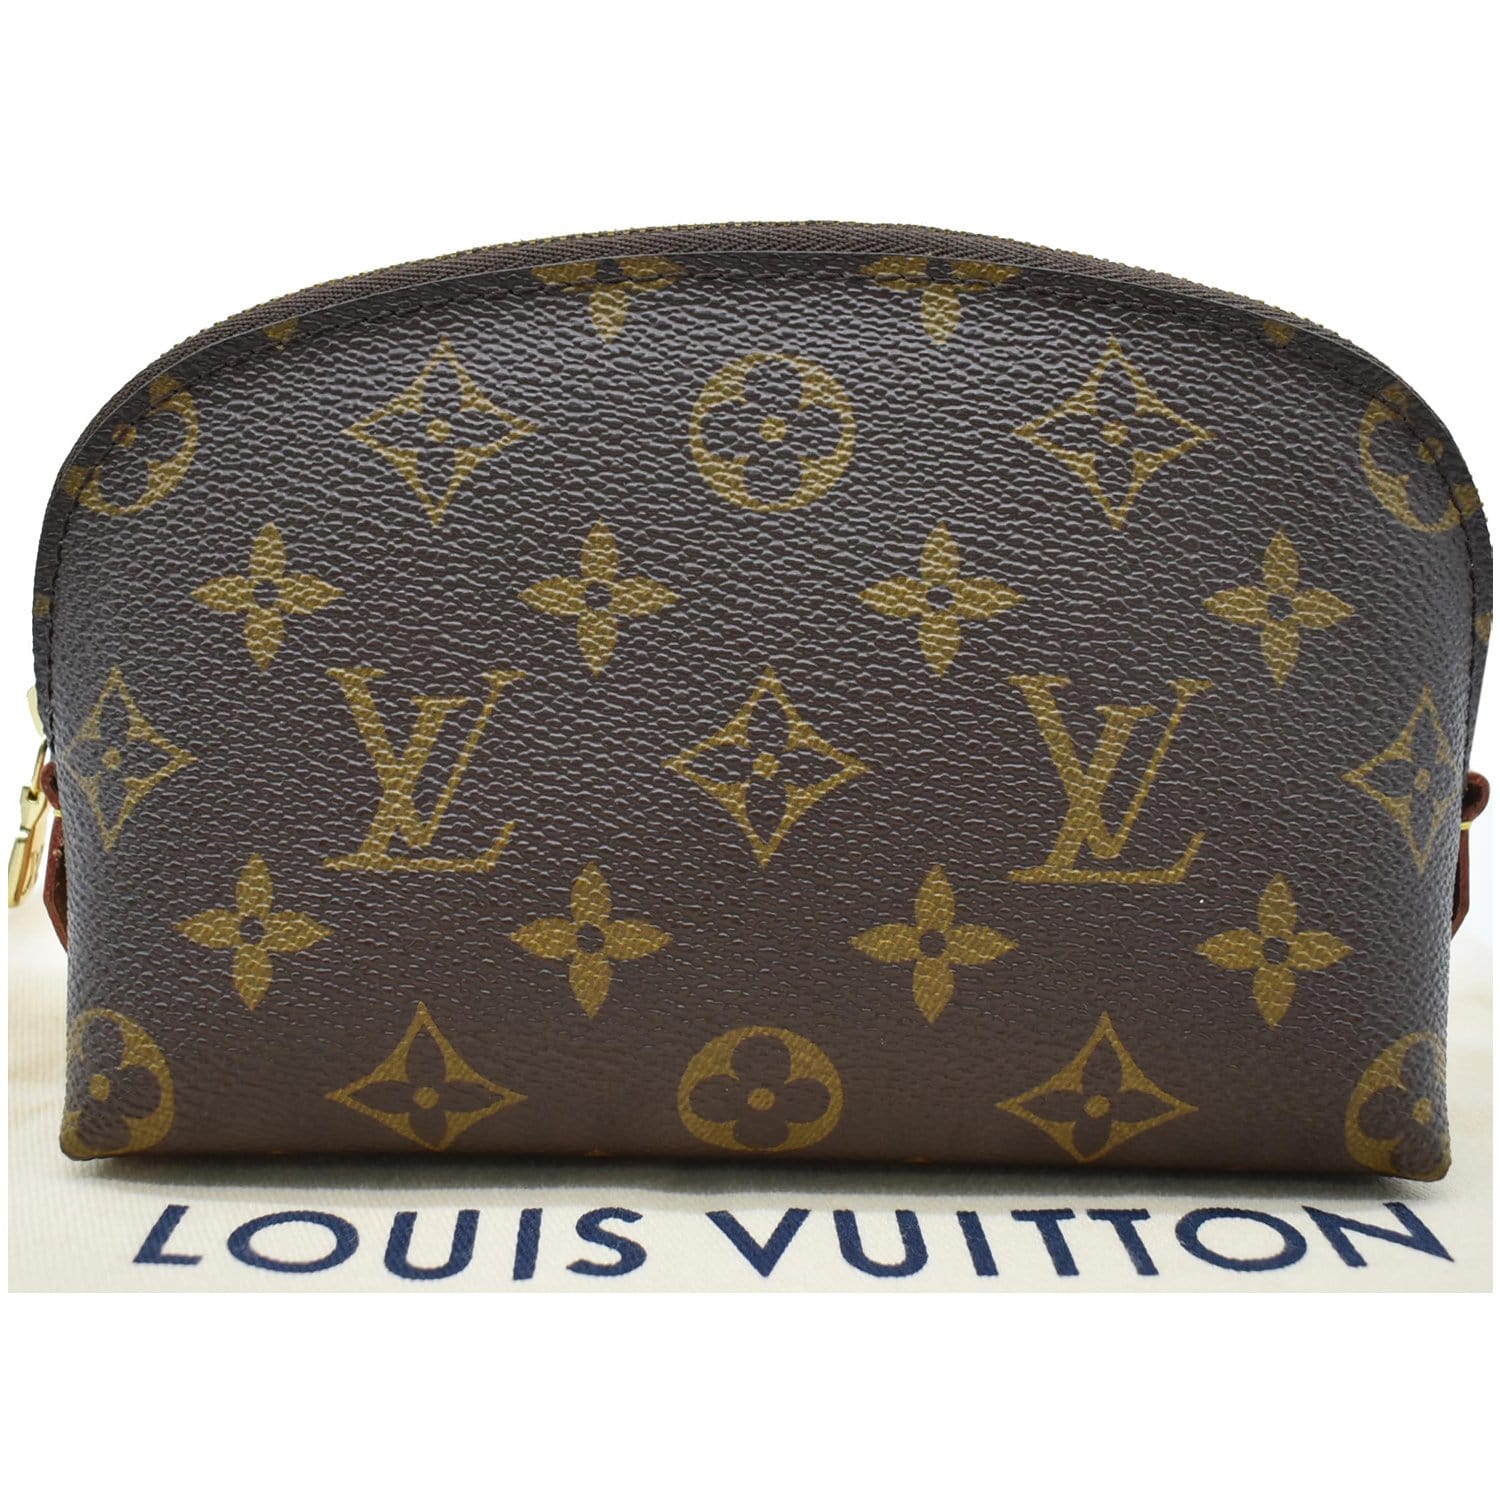 Louis Vuitton - Cosmetic Pouch - Monogram Canvas - GHW